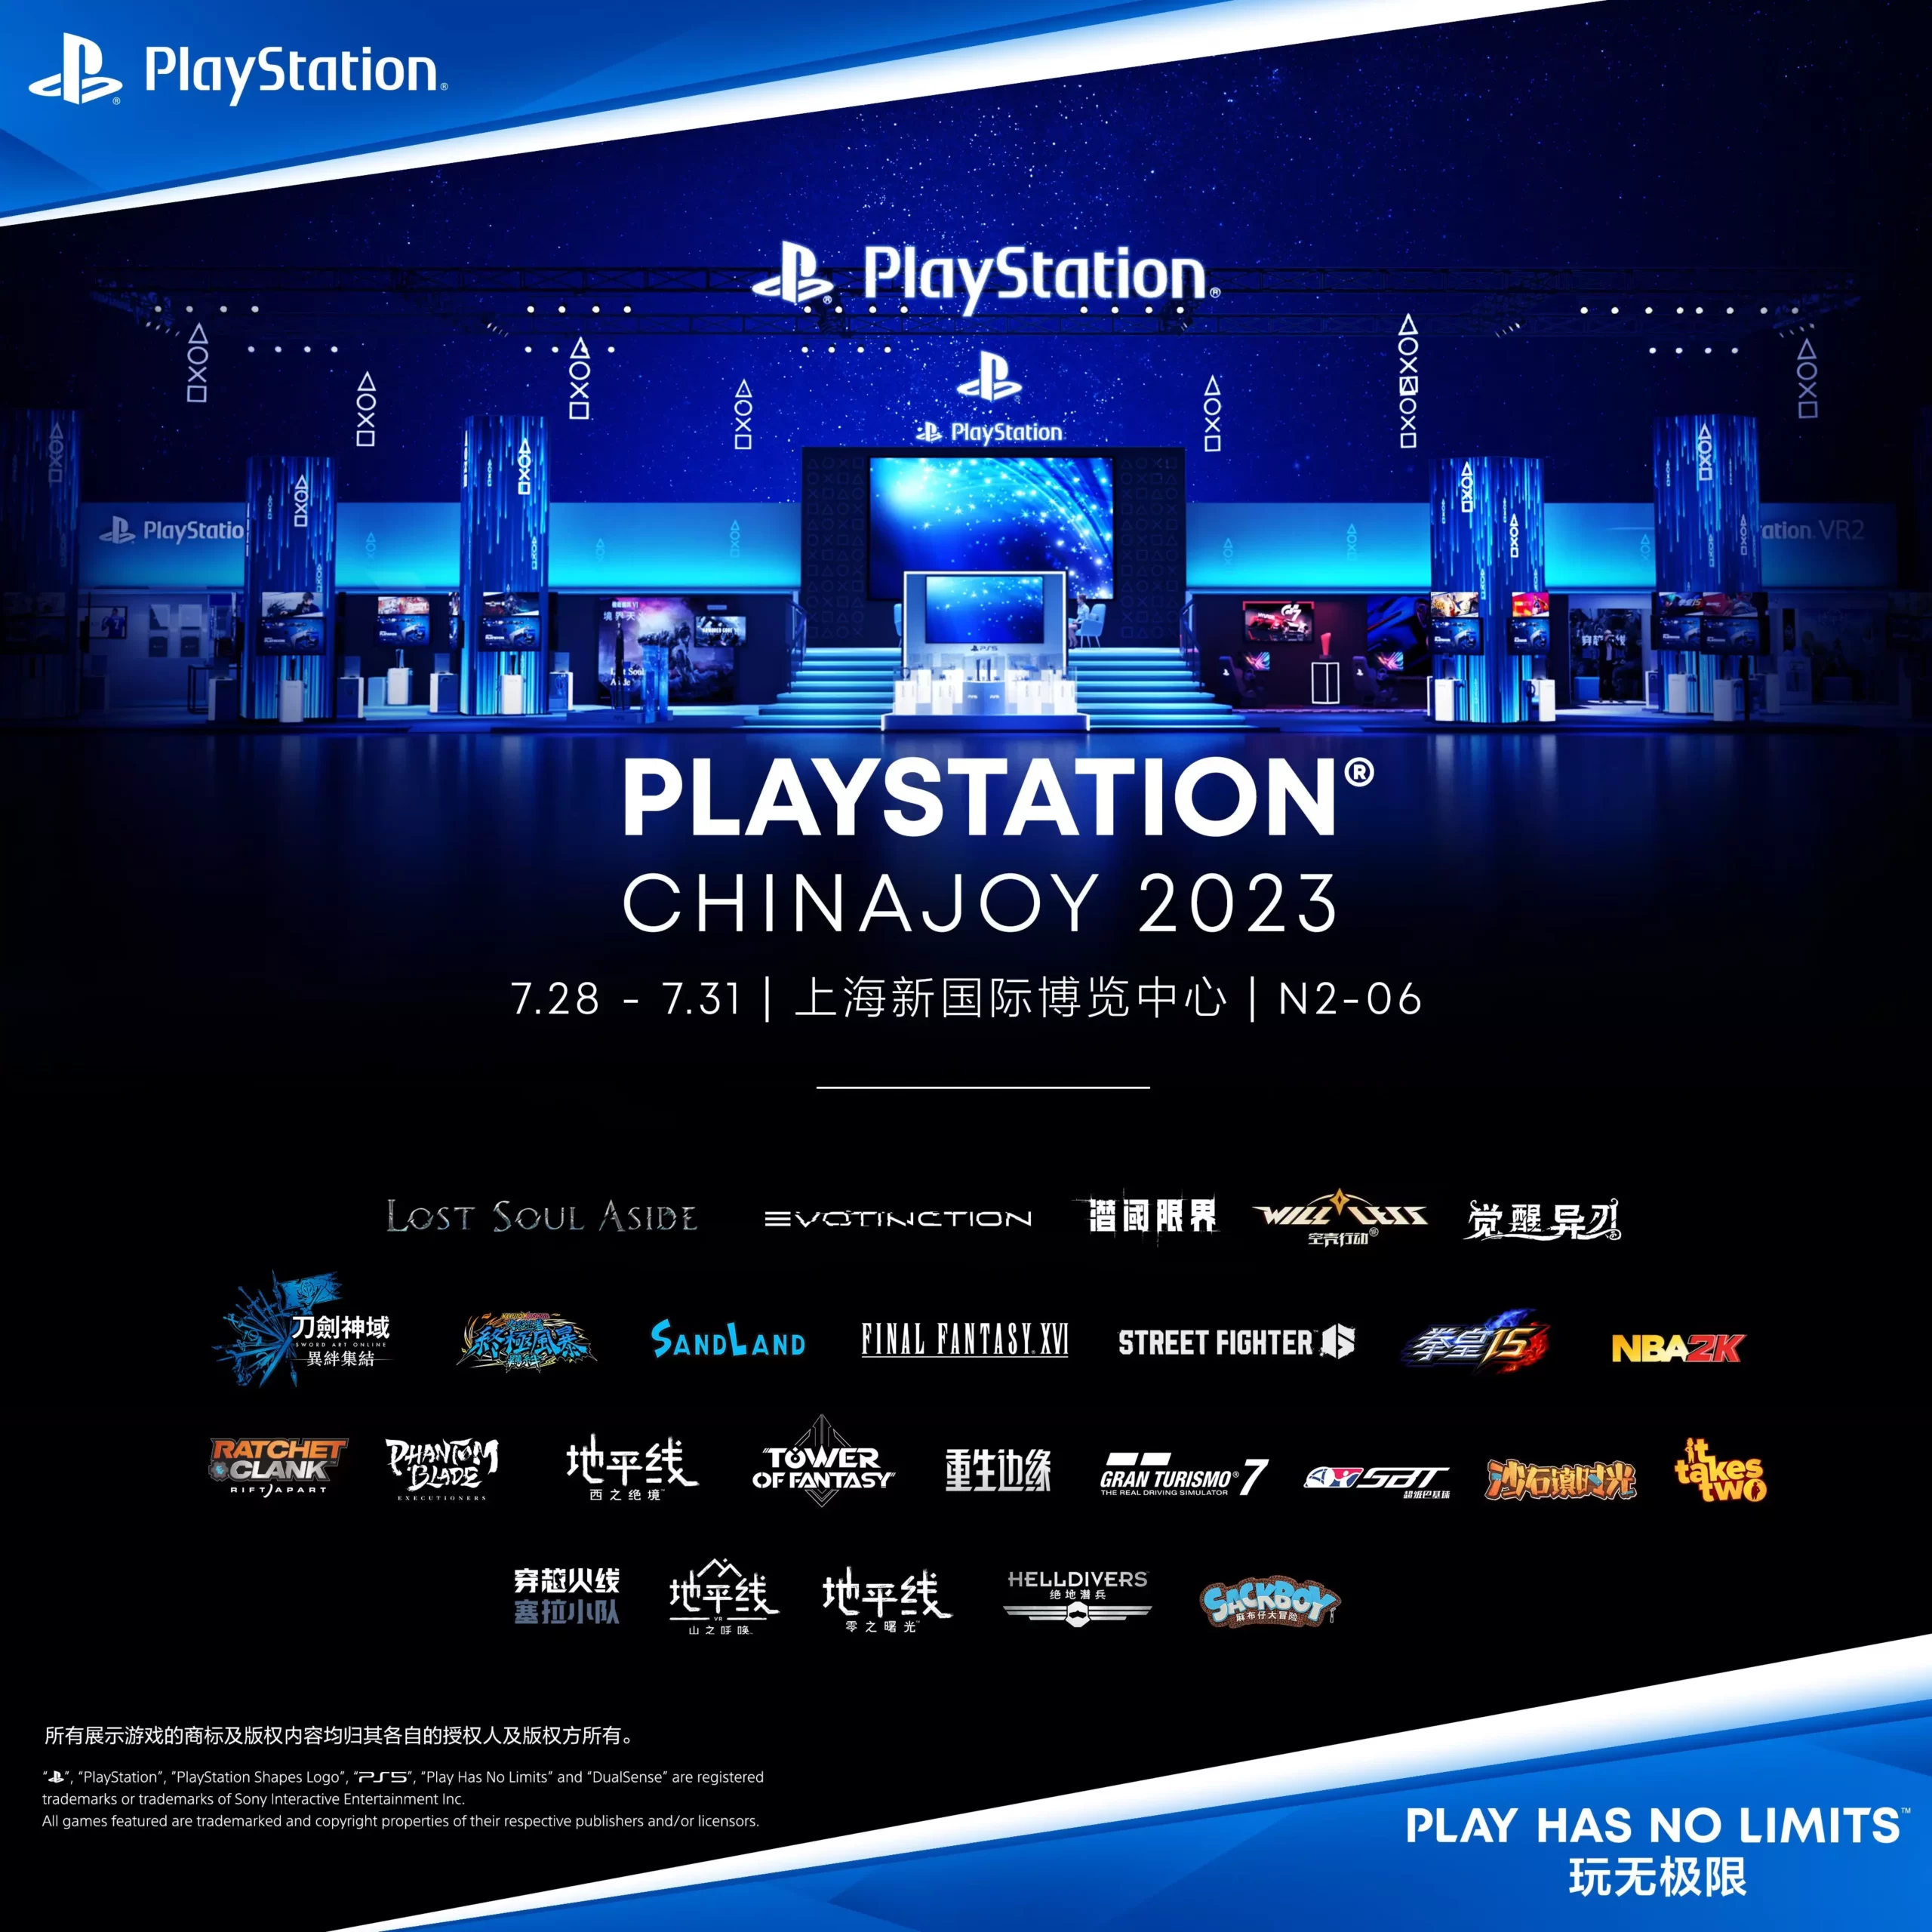 PlayStation ChinaJoy 2023 programação jogos